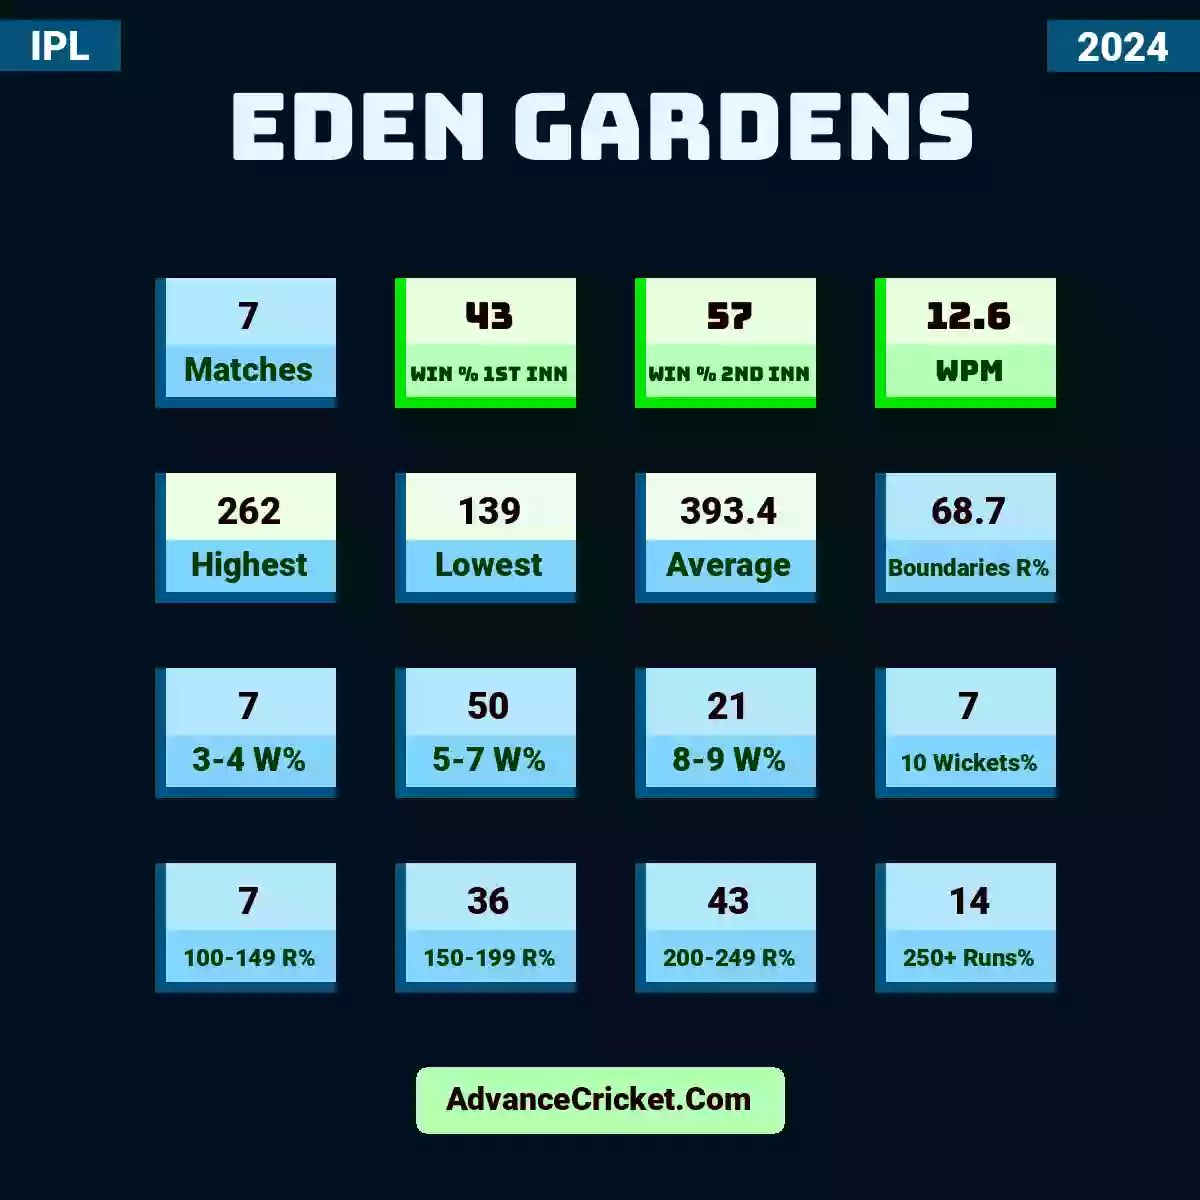 Image showing Eden Gardens IPL 2024 with Matches: 5, Win % 1st Inn: 40, Win % 2nd Inn: 60, WPM: 12.2, Highest: 262, Lowest: 161, Average: 429.6, Boundaries R%: 69.6, 3-4 W%: 0, 5-7 W%: 60, 8-9 W%: 10, 10 Wickets%: 10, 100-149 R%: 0, 150-199 R%: 20, 200-249 R%: 60, 250+ Runs%: 20.